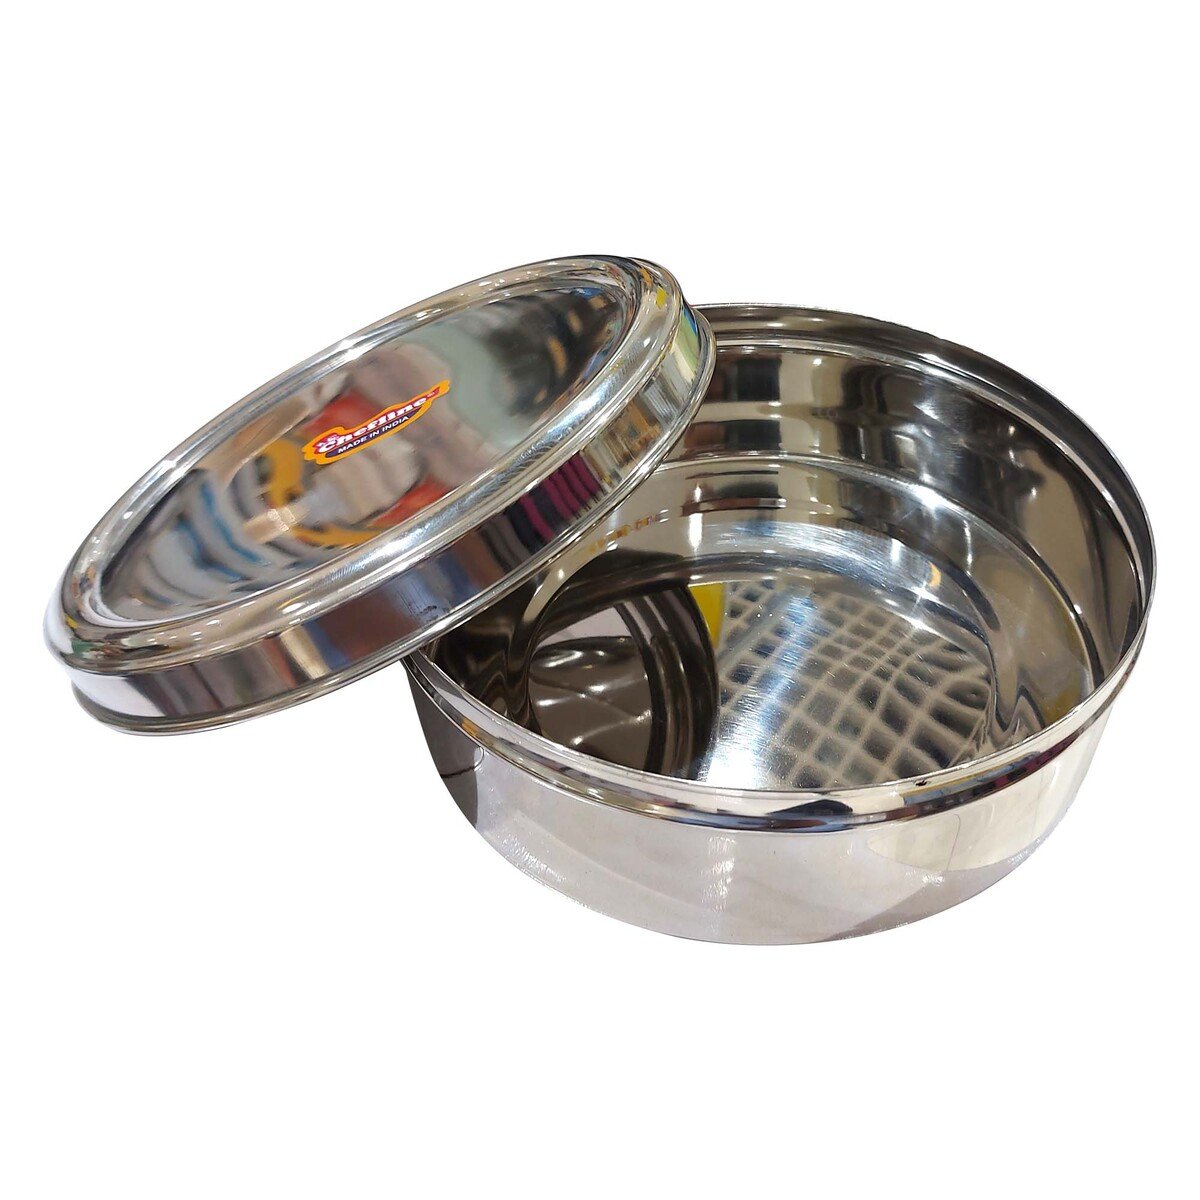 Chefline Stainless Steel Lunch Box, Round, Medium M3, India